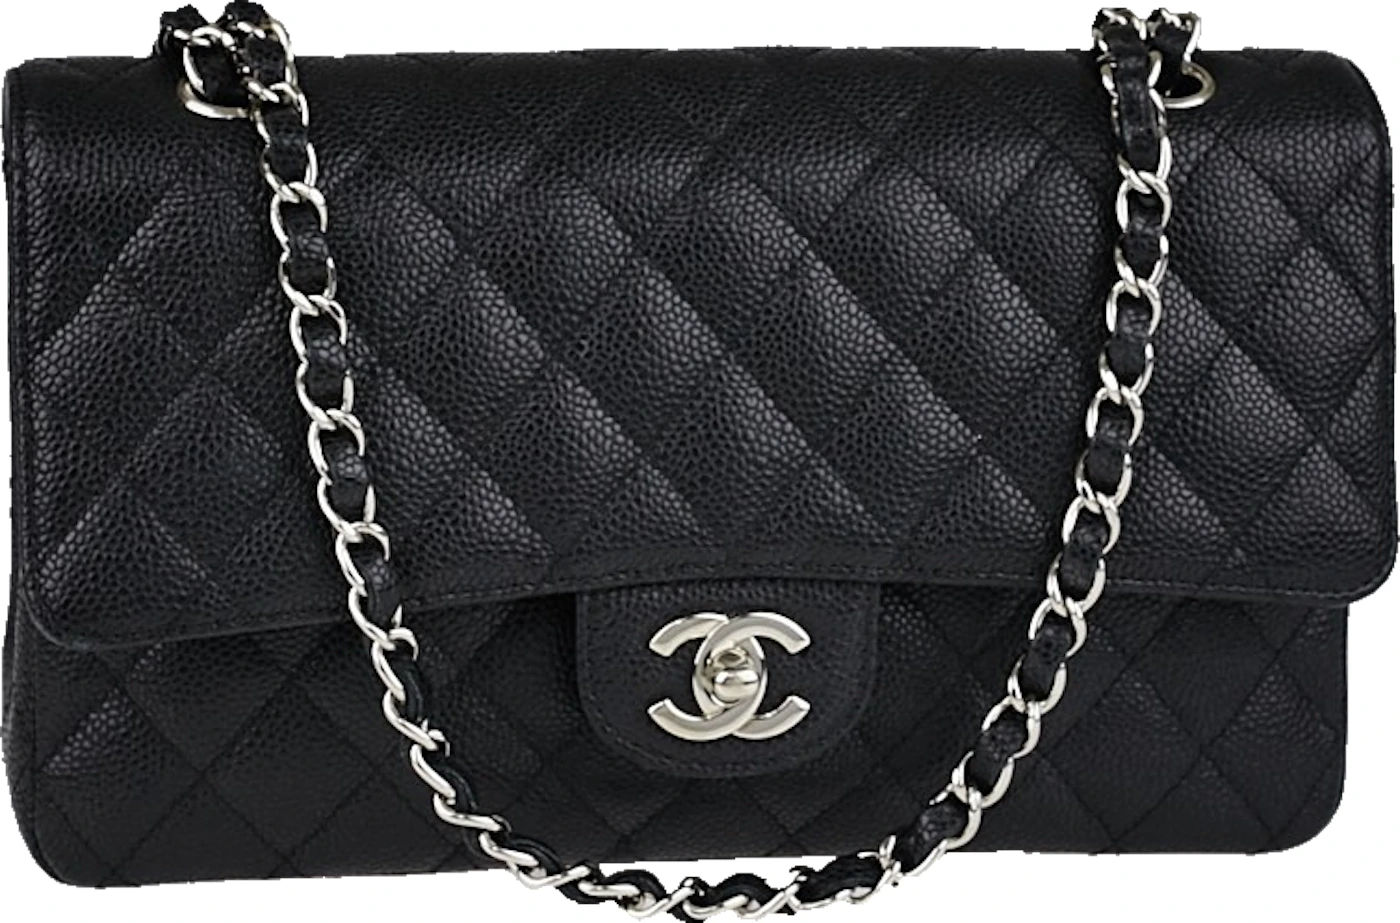 black and white chanel flap bag caviar